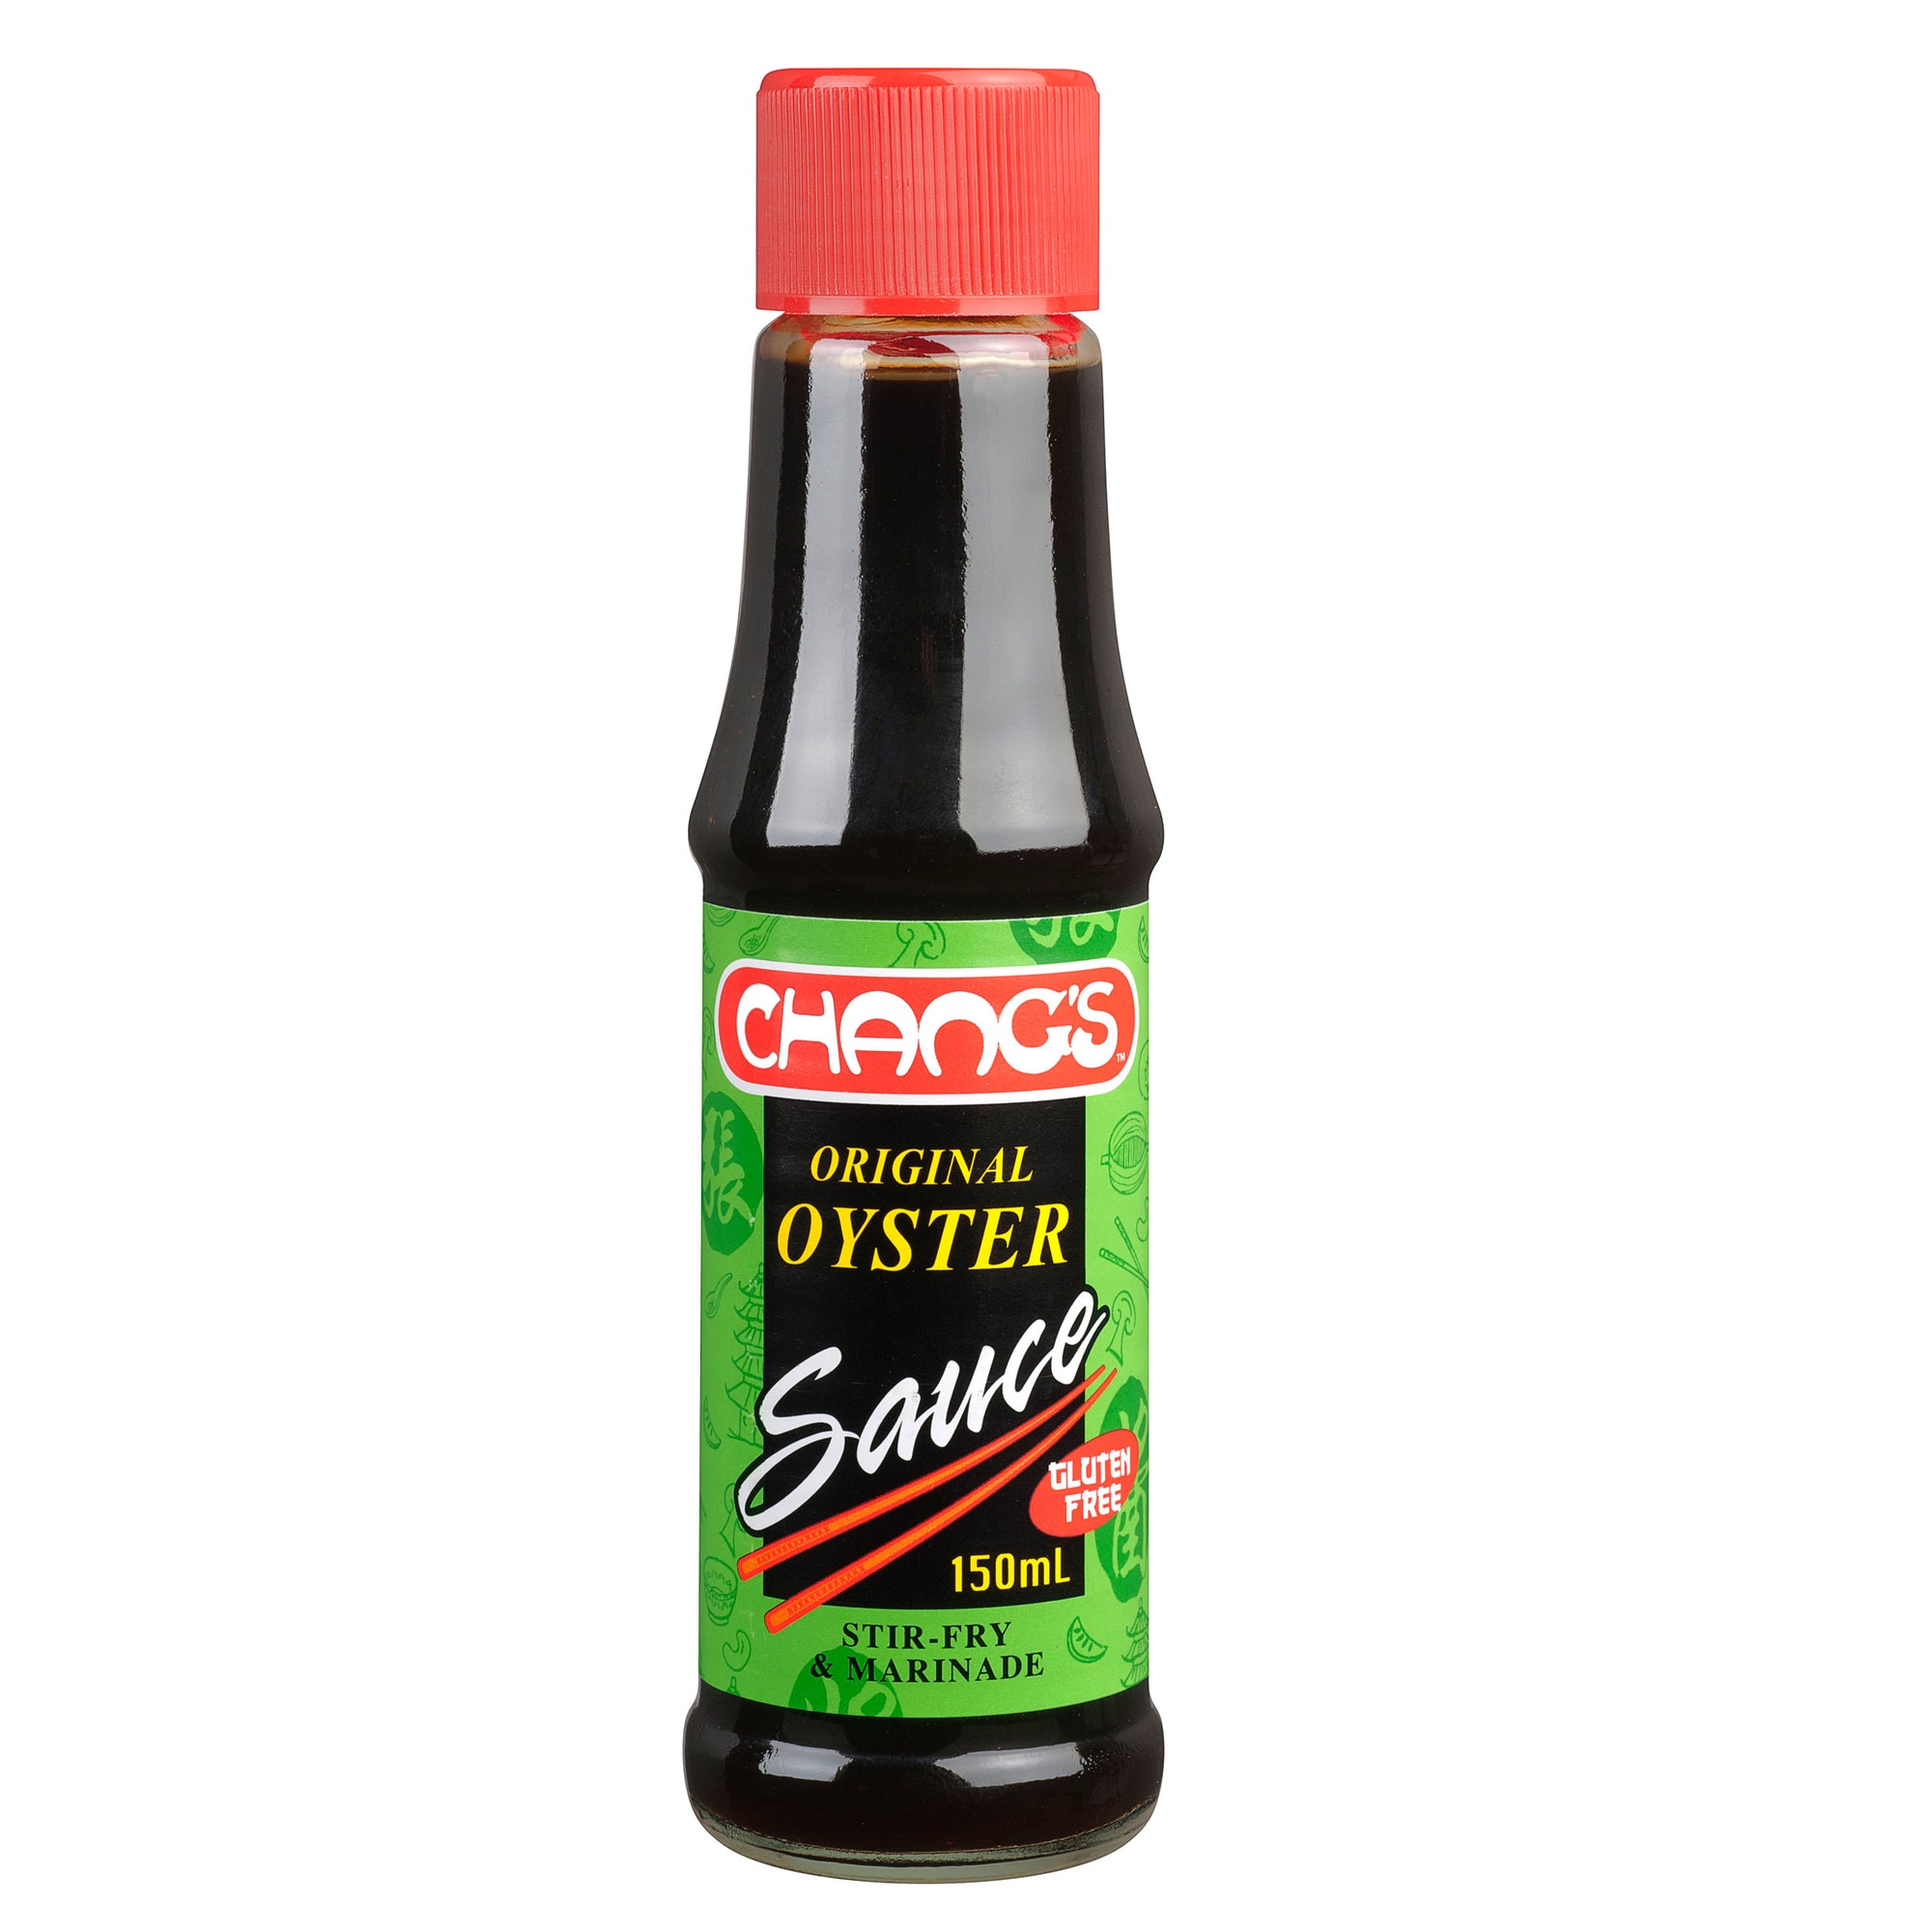 Chang's Original Oyster Sauce 150ml